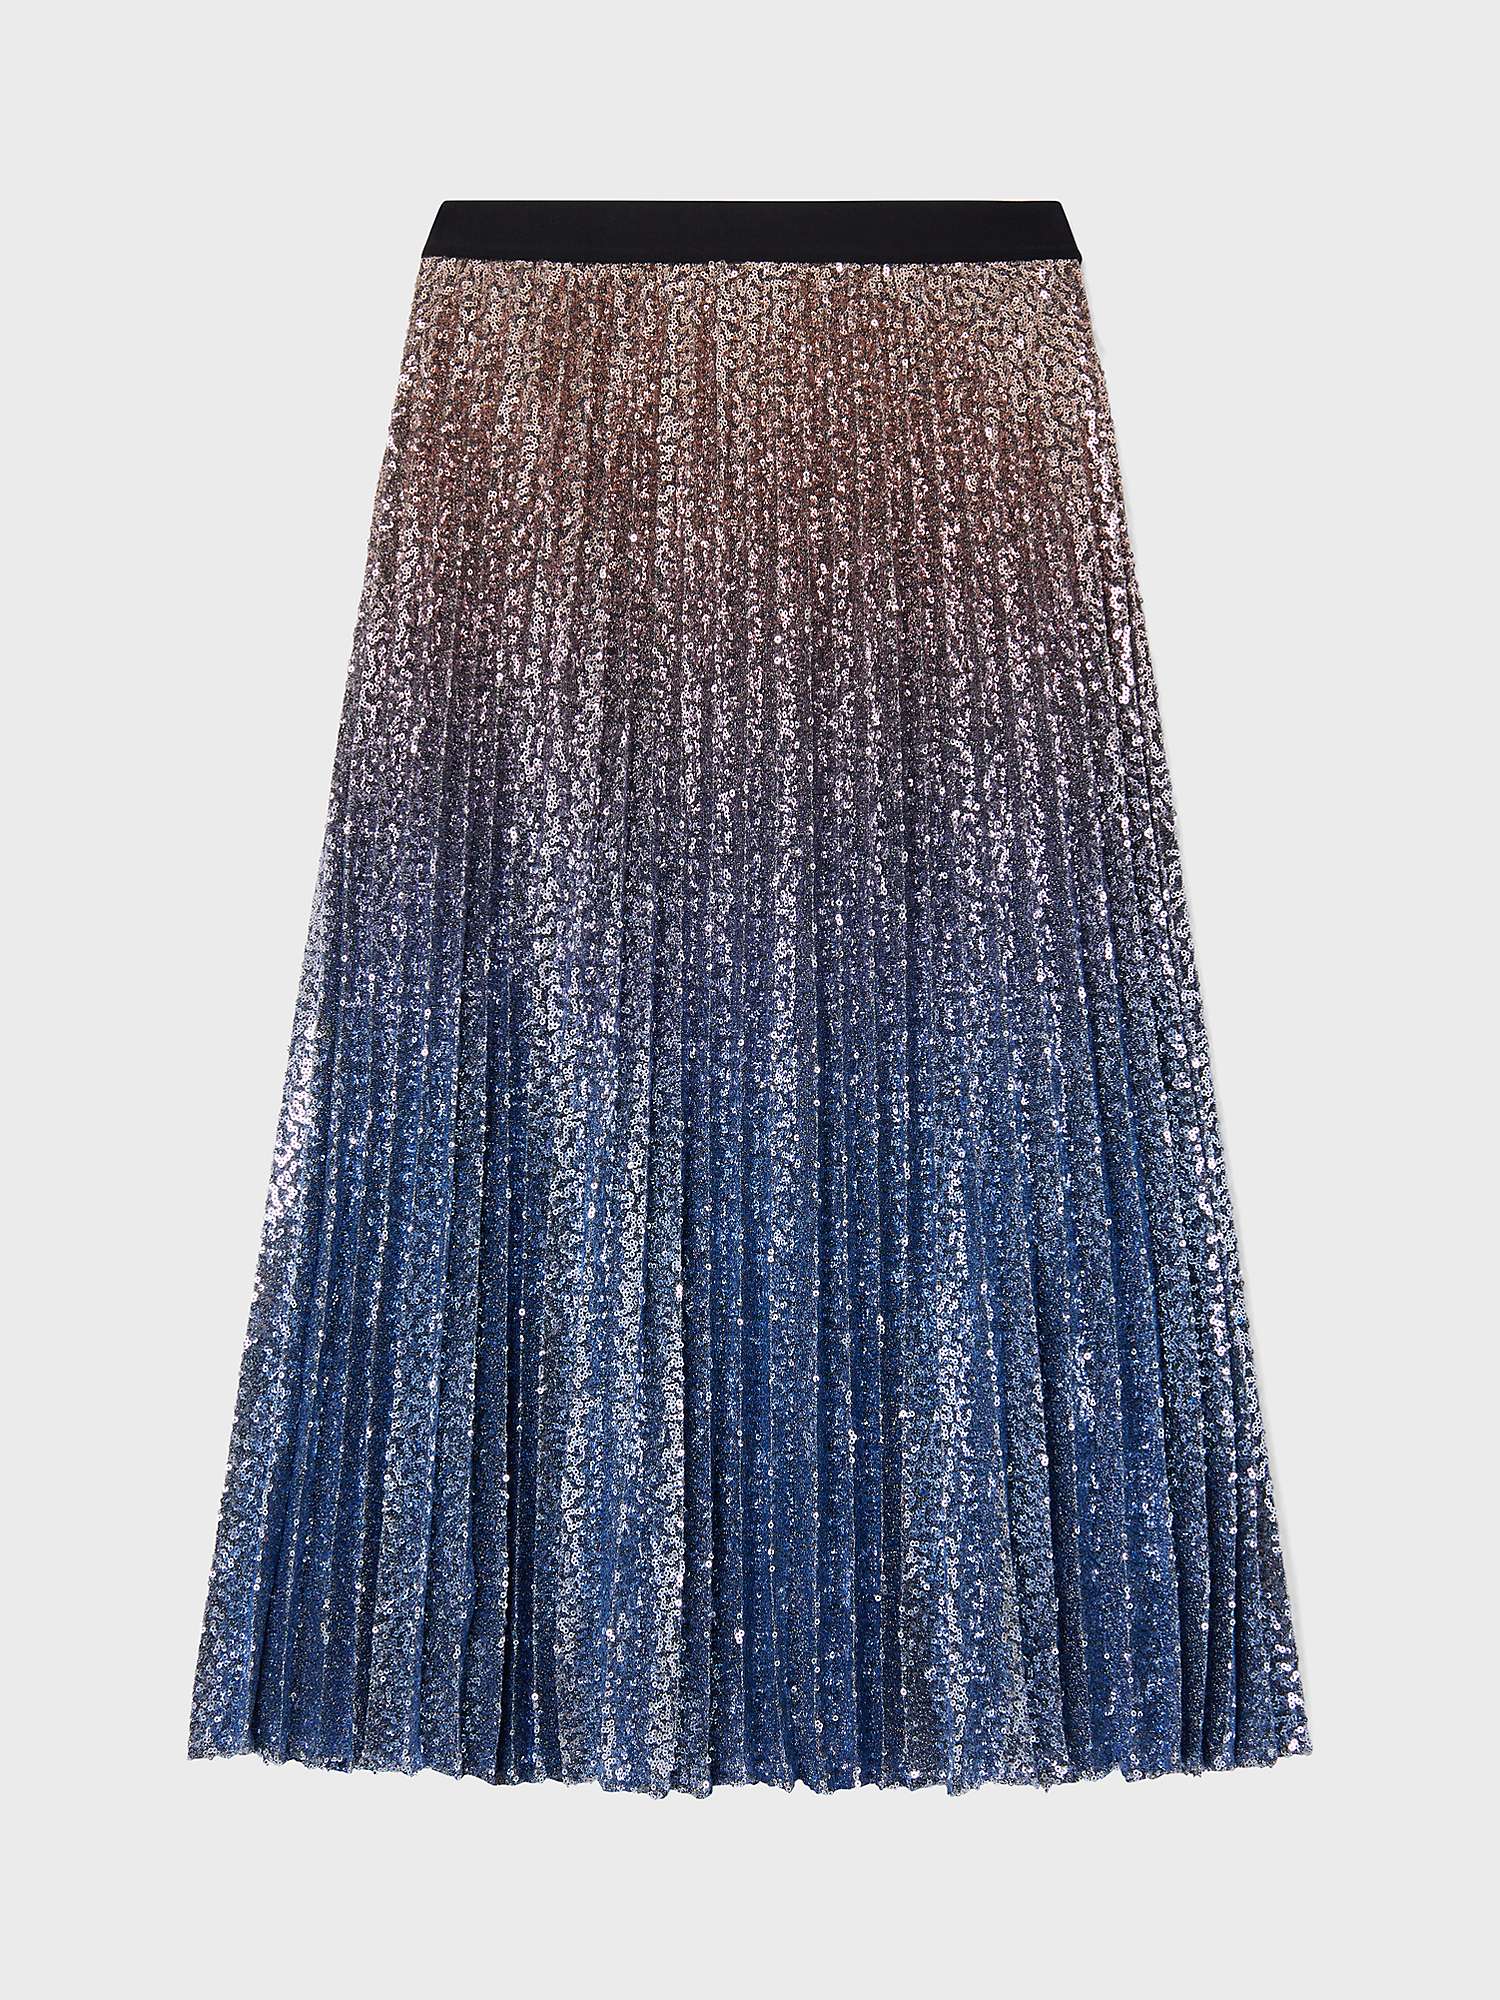 Gerard Darel Beth Shimmer Ombre Pleated Skirt, Blue/Multi at John Lewis ...